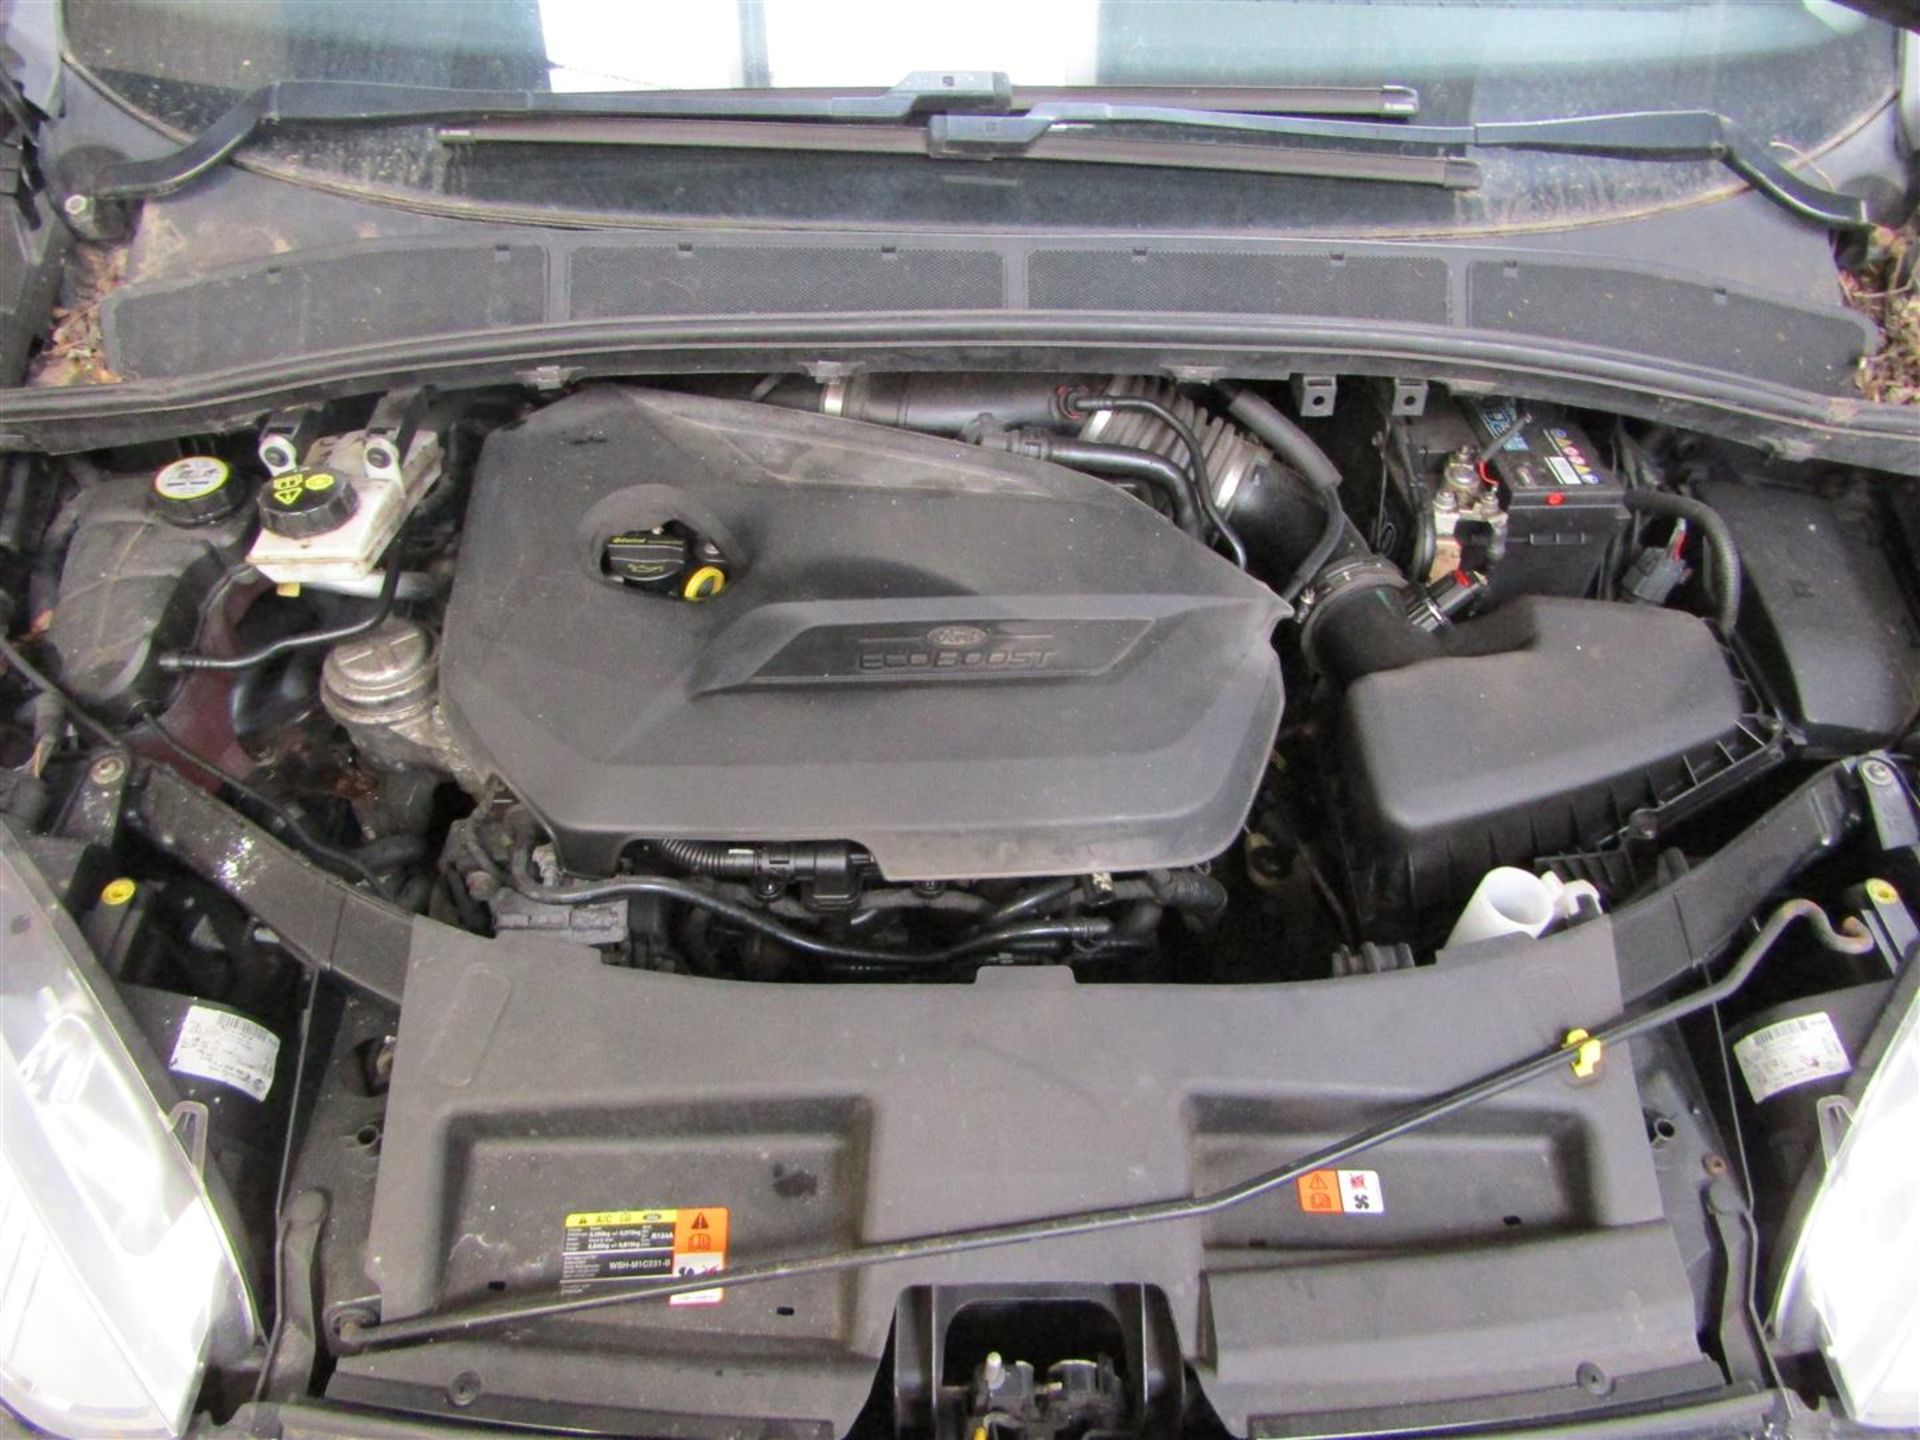 61 11 Ford S-Max Zetec Turbo - Image 4 of 21